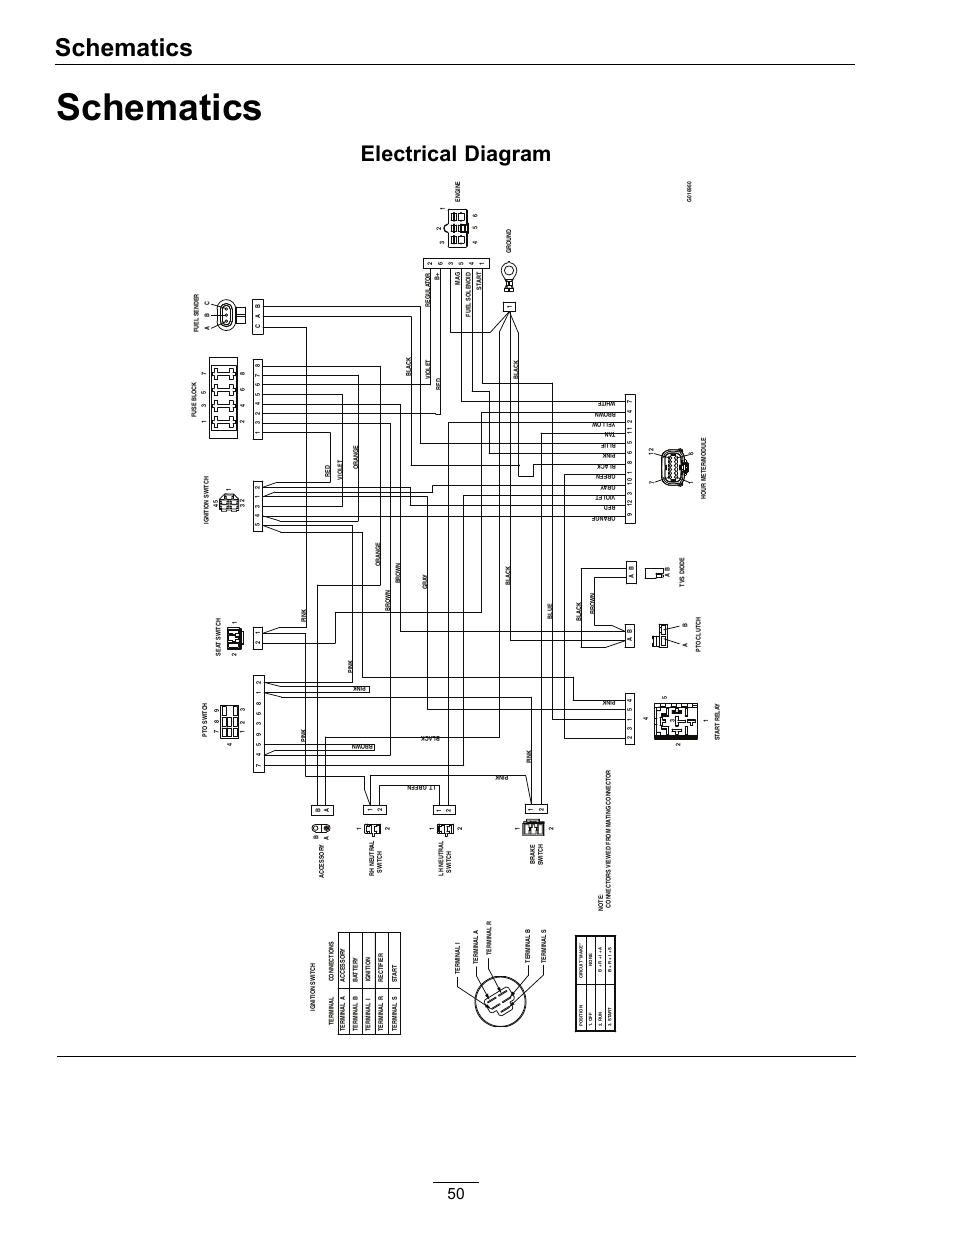 dictator management system wiring diagram